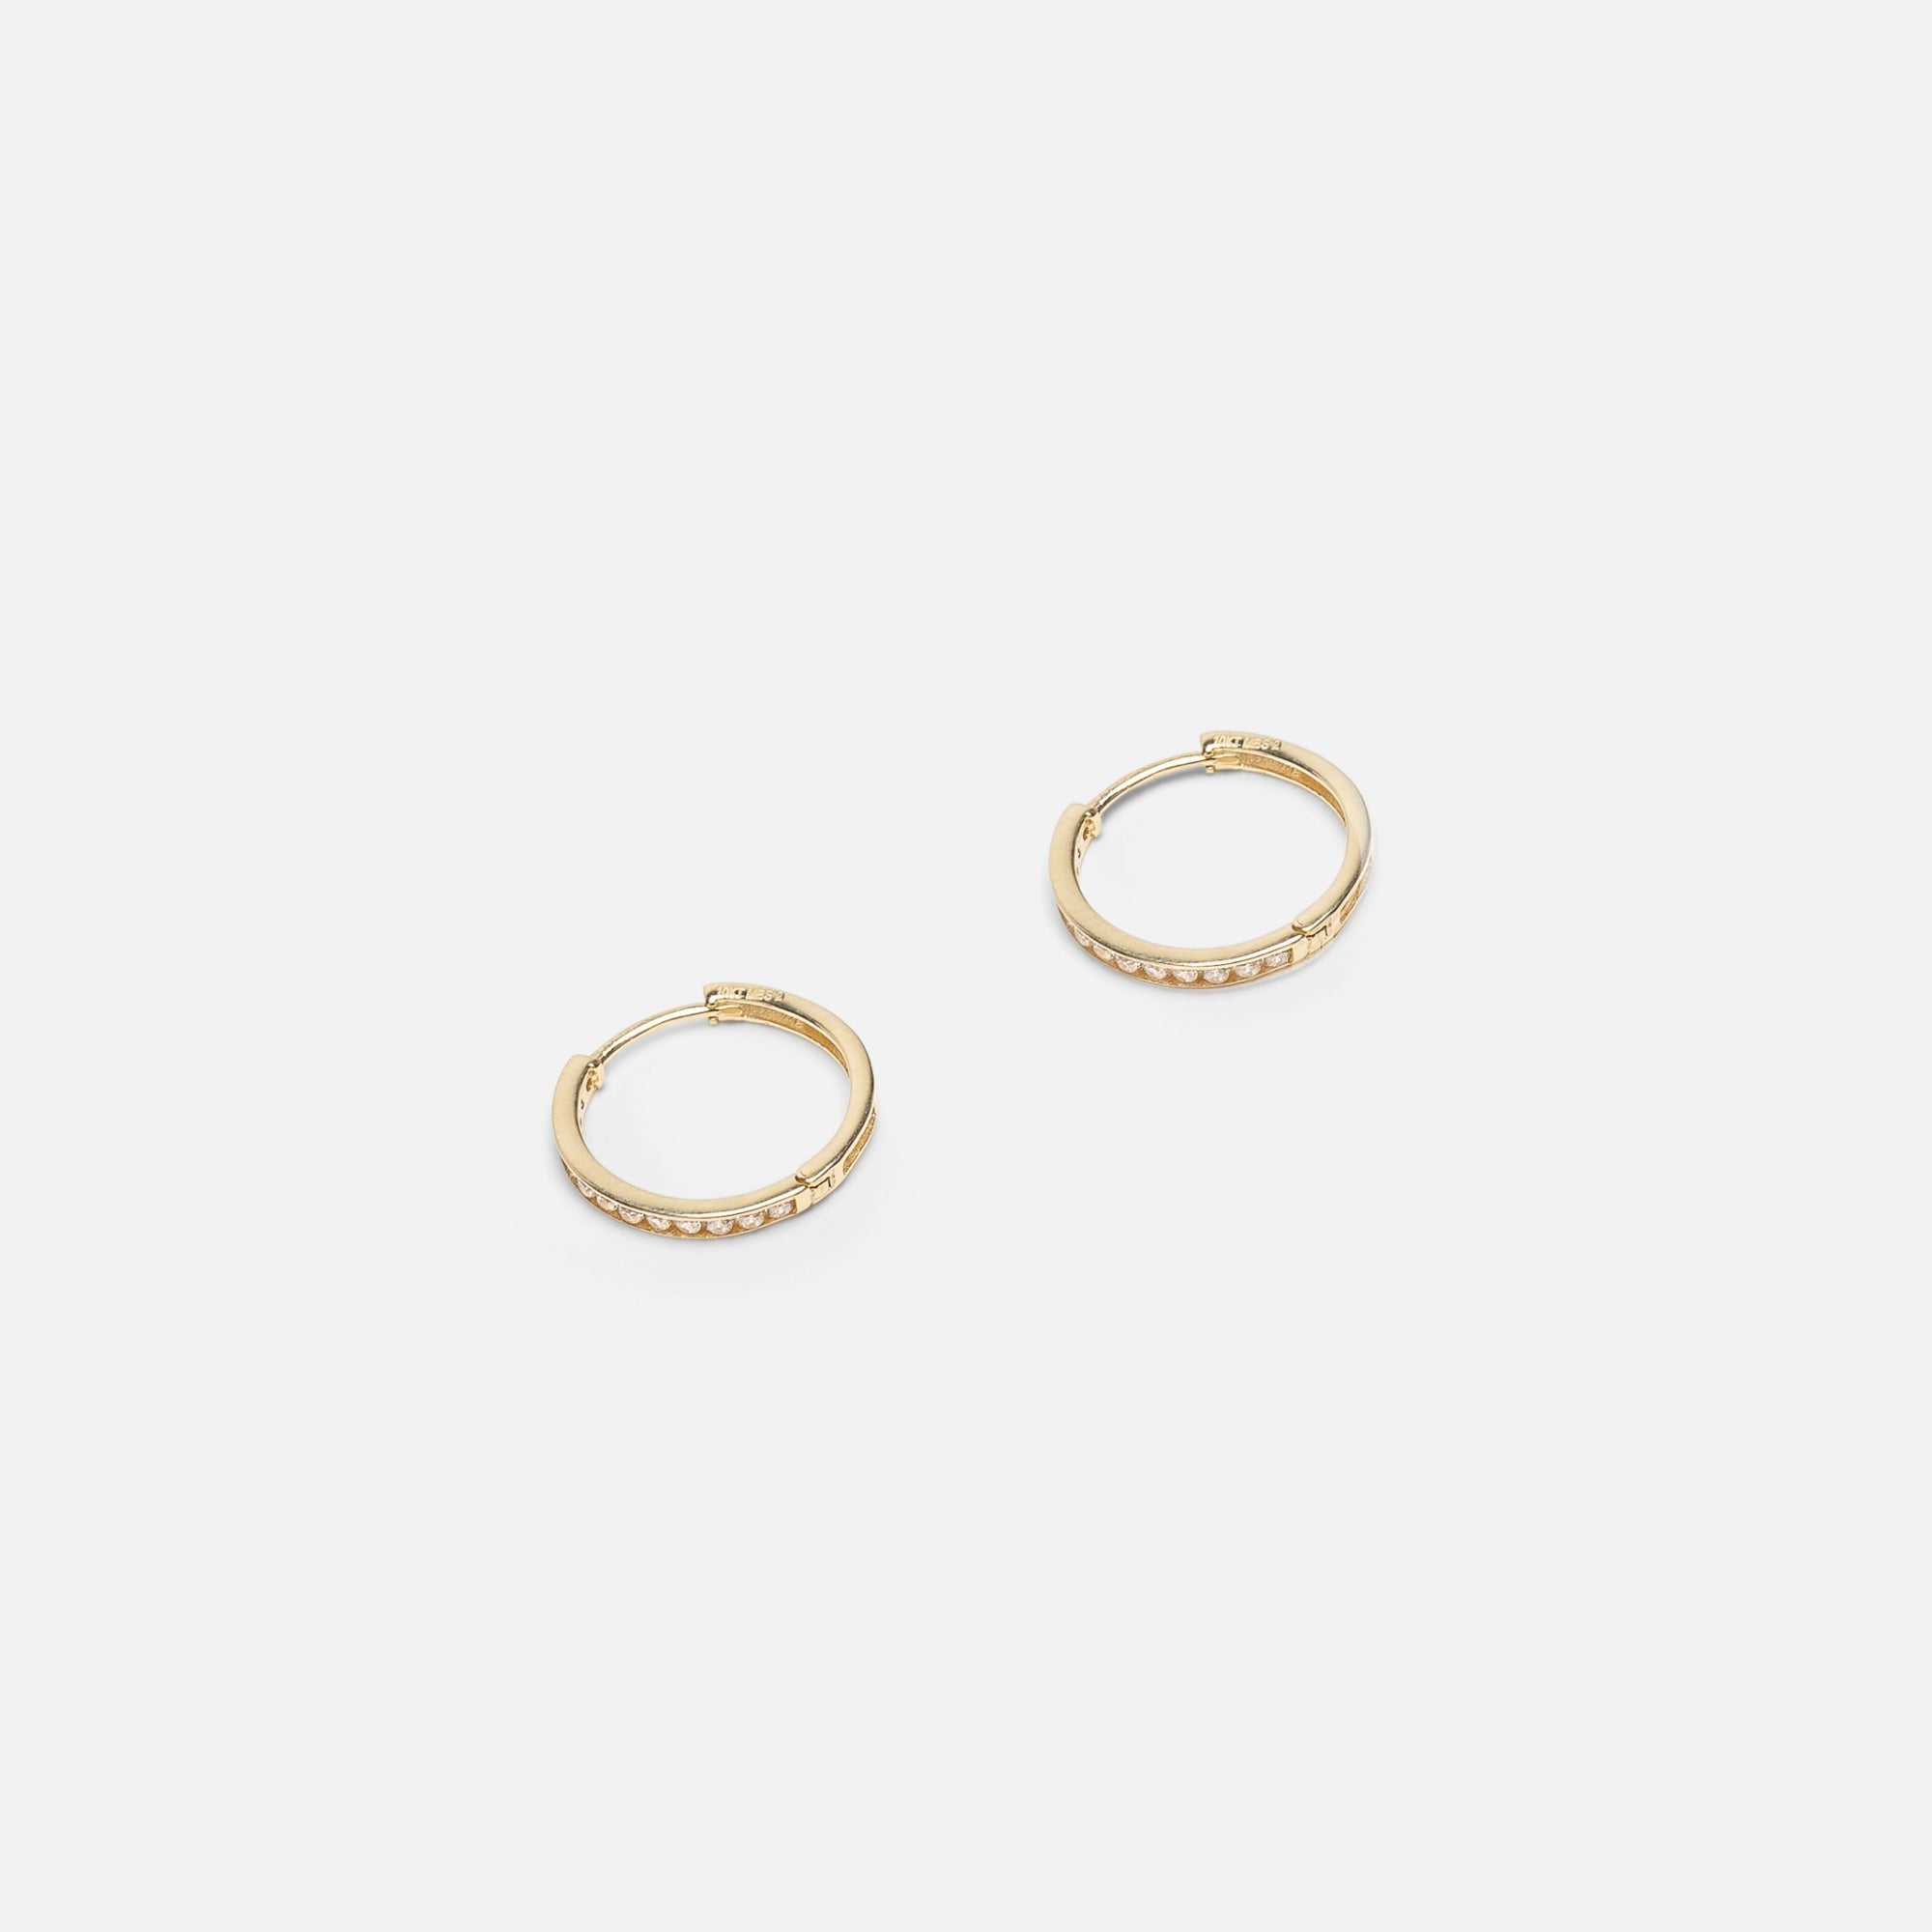 10k yellow gold 16 mm hoop earrings with cubic zirconia